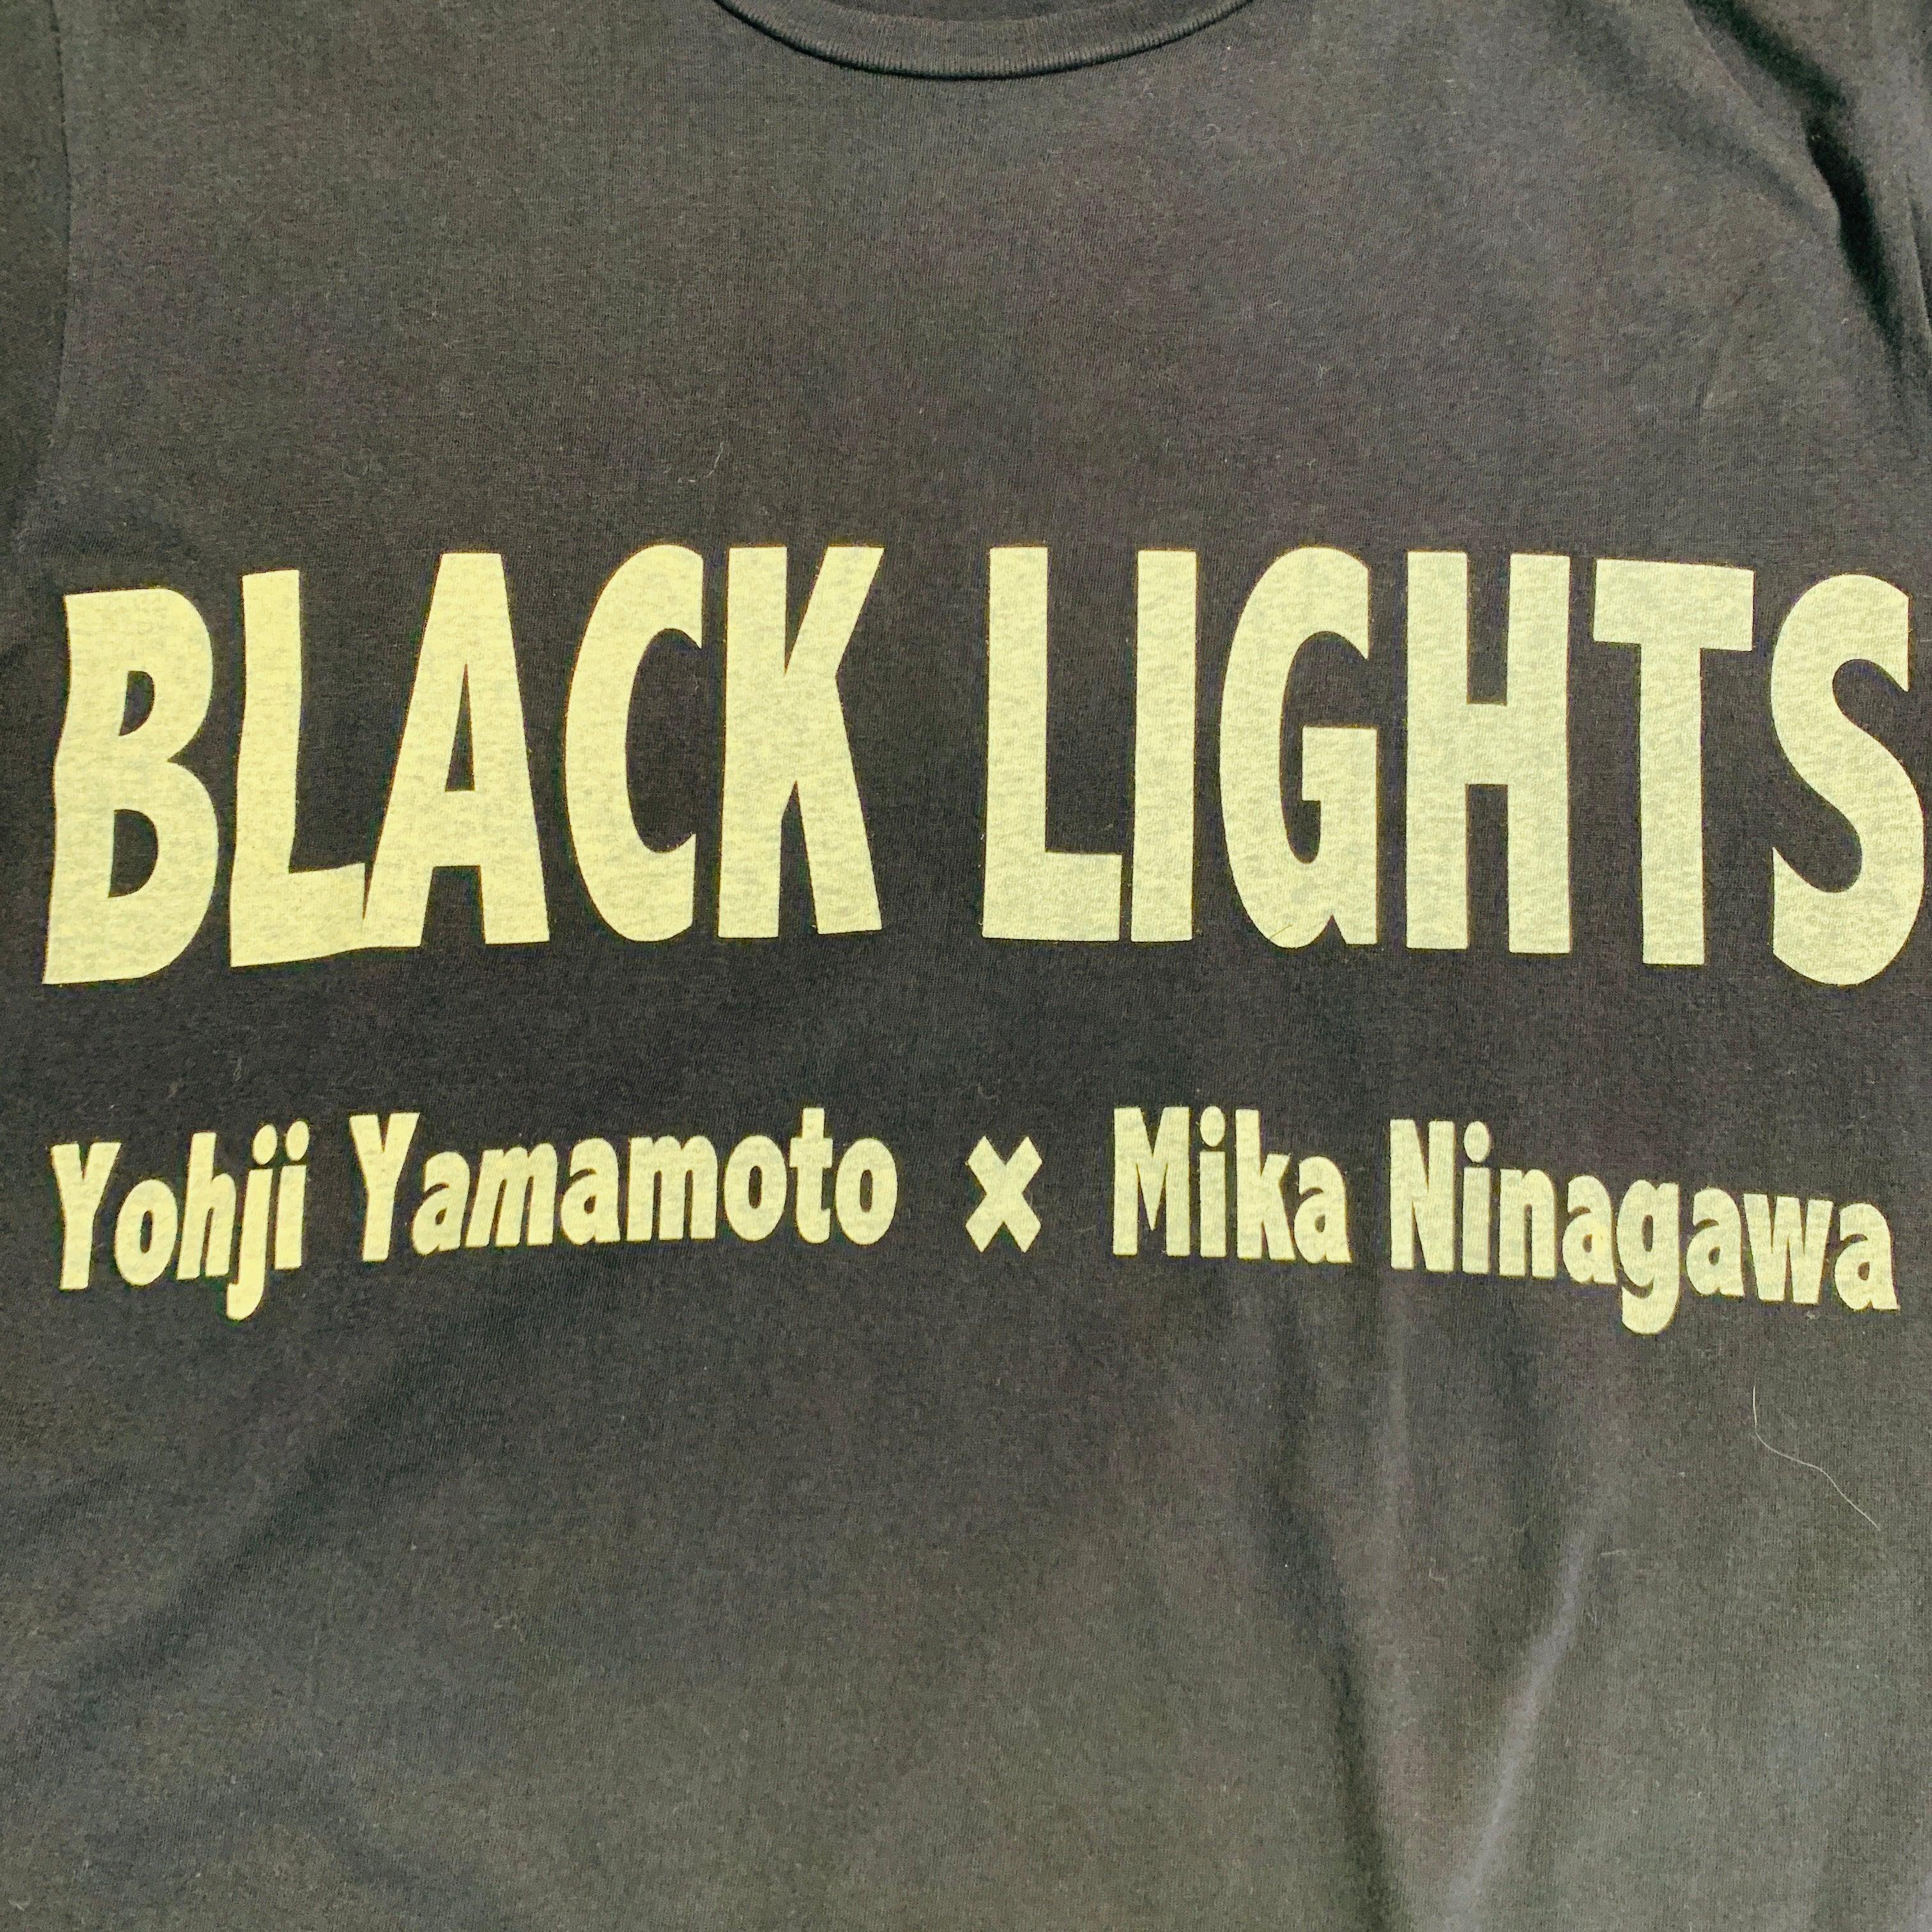 T-shirt YOHJI YAMAMOTO x MIKA NINAGAWA
en tricot de coton bleu marine, avec impression du logo 